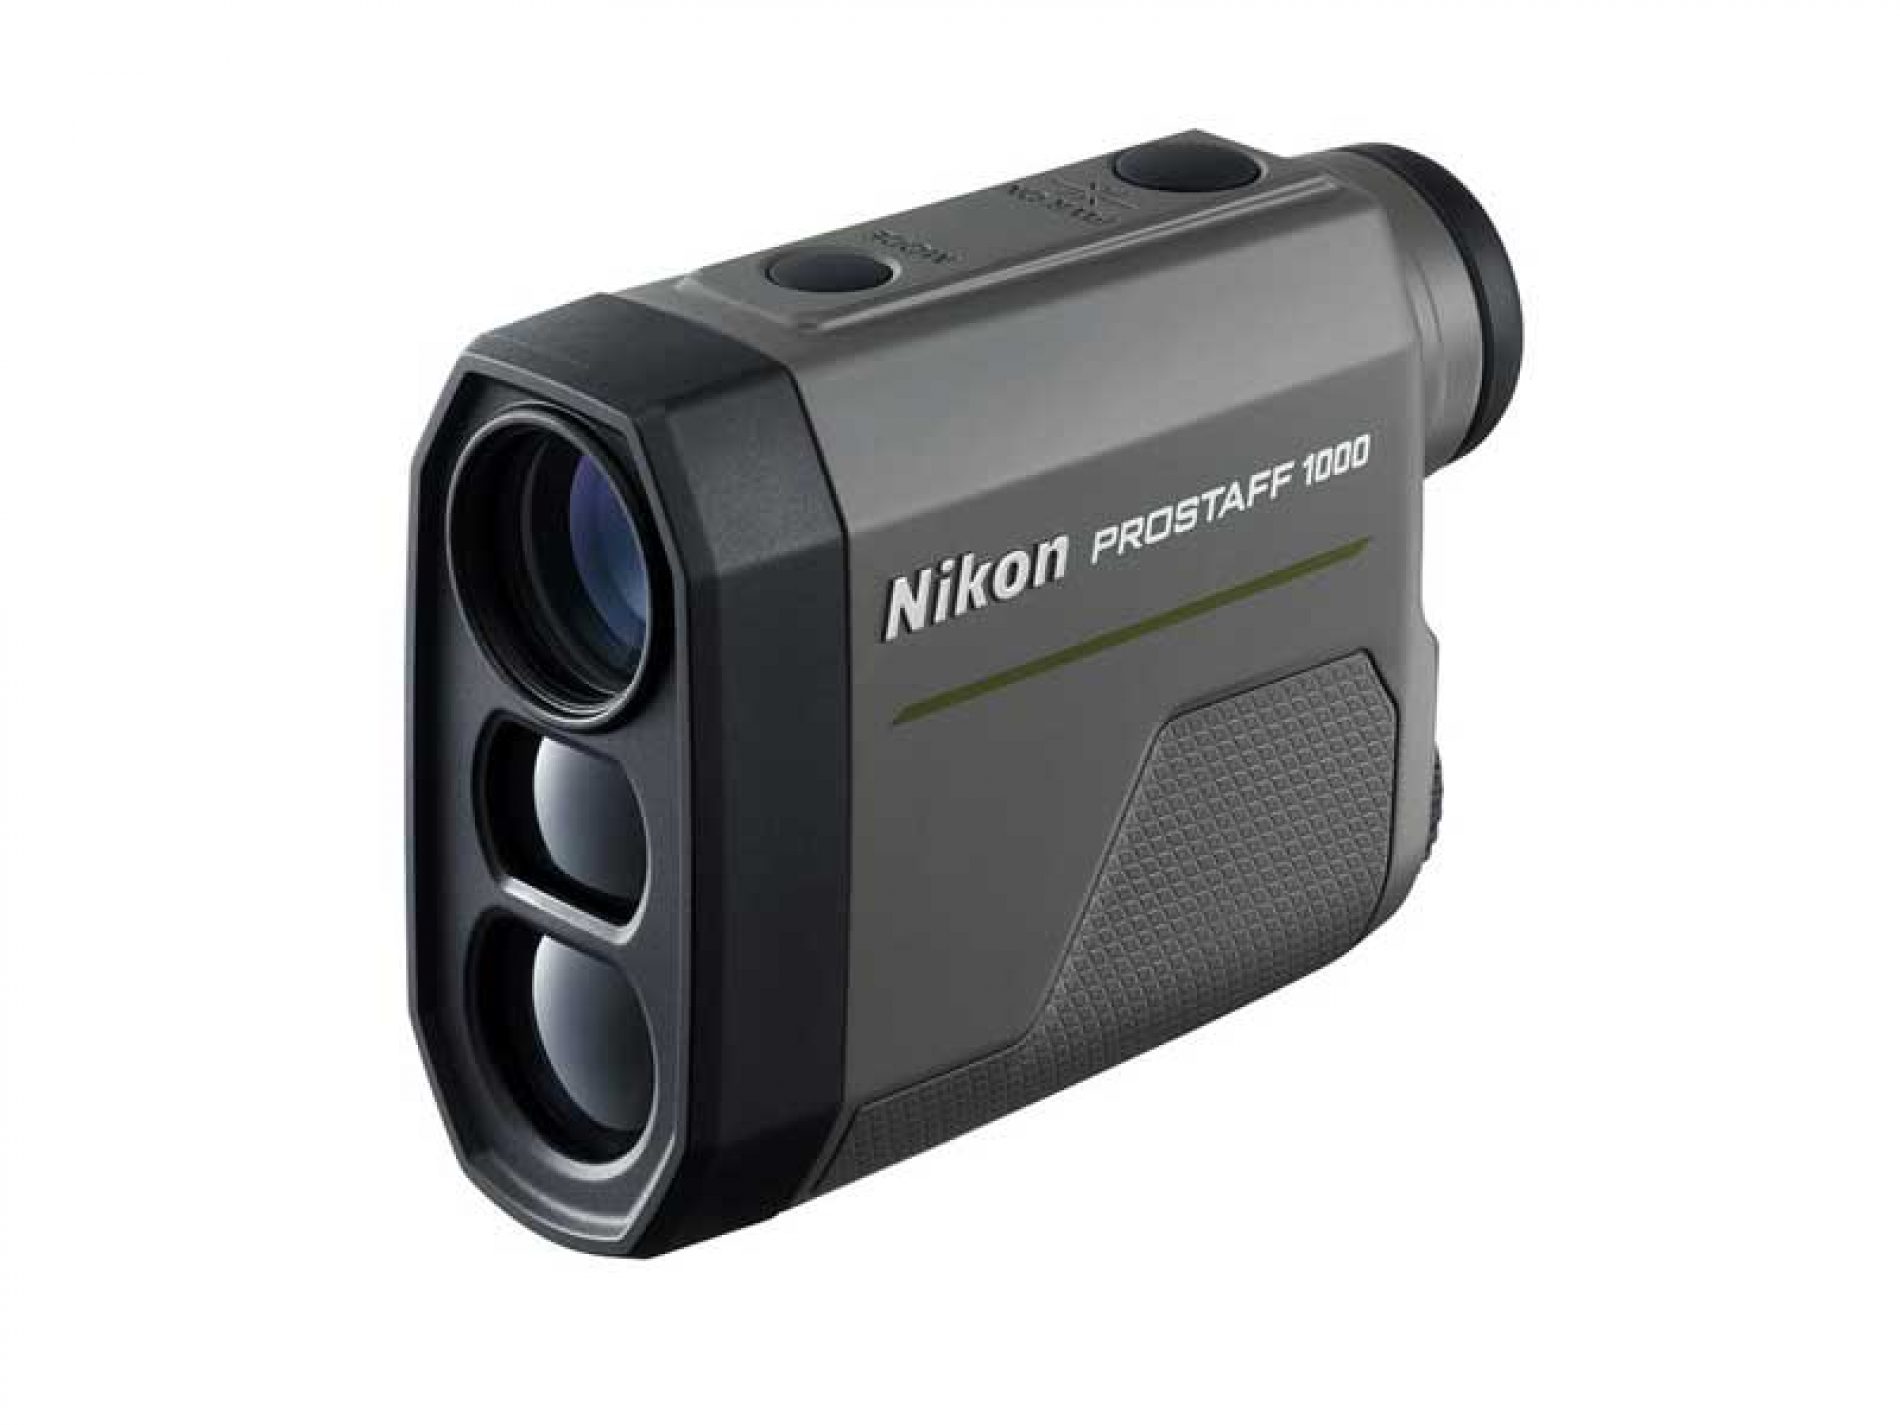 Telémetro láser PROSTAFF 1000 de Nikon, compacto, ligero con rango de medición de hasta 910 m